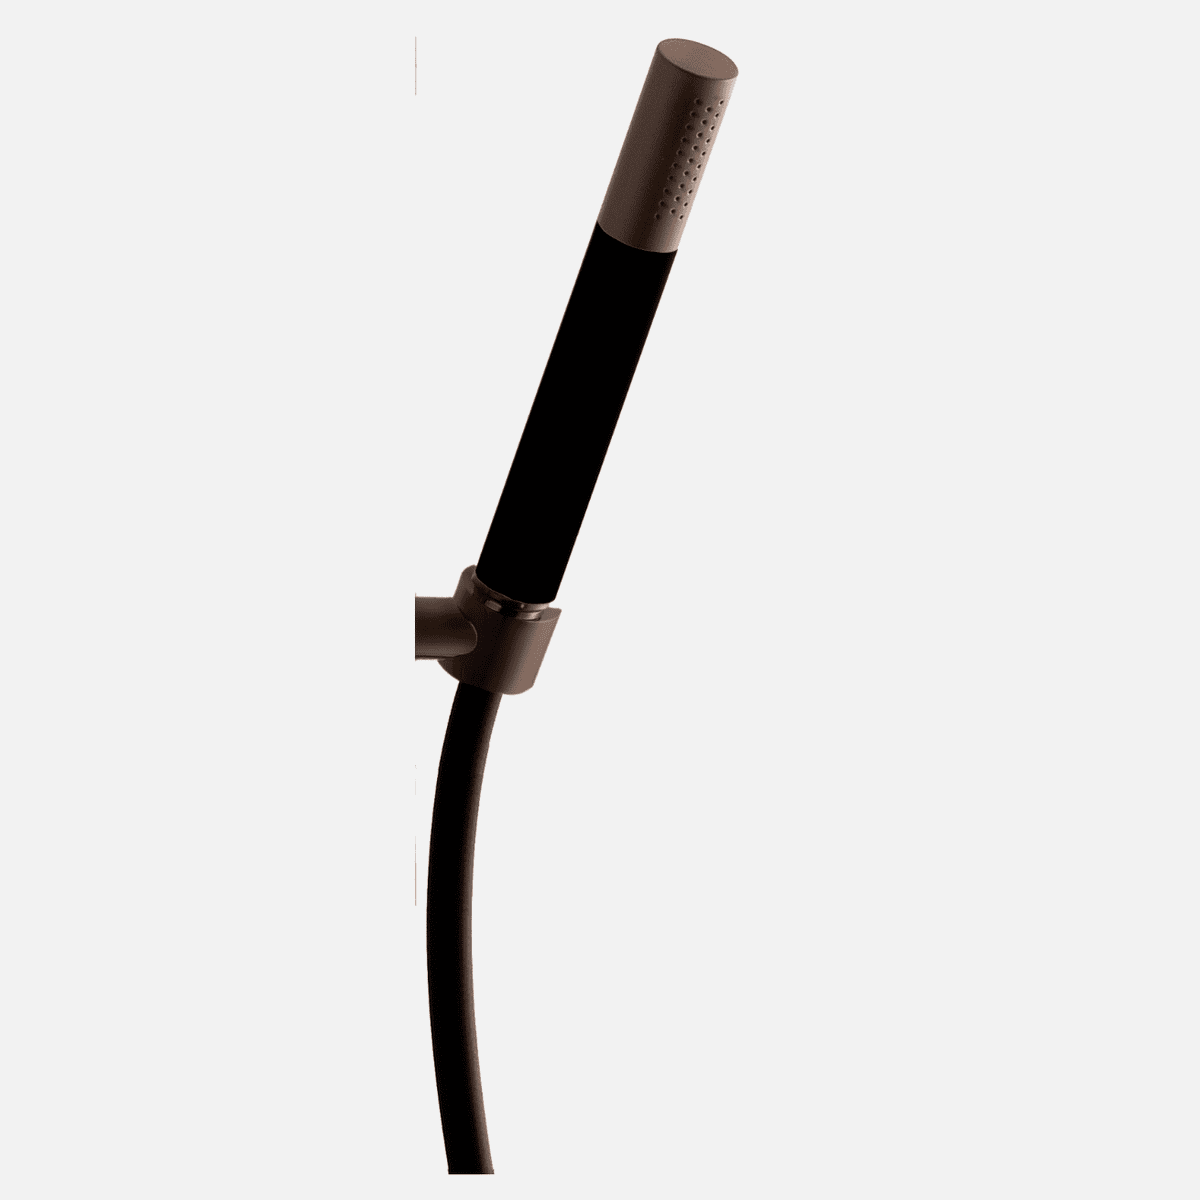 Se Tapwell DSO14090 håndbruser m/sort "grip" - bronze hos Bad&Design